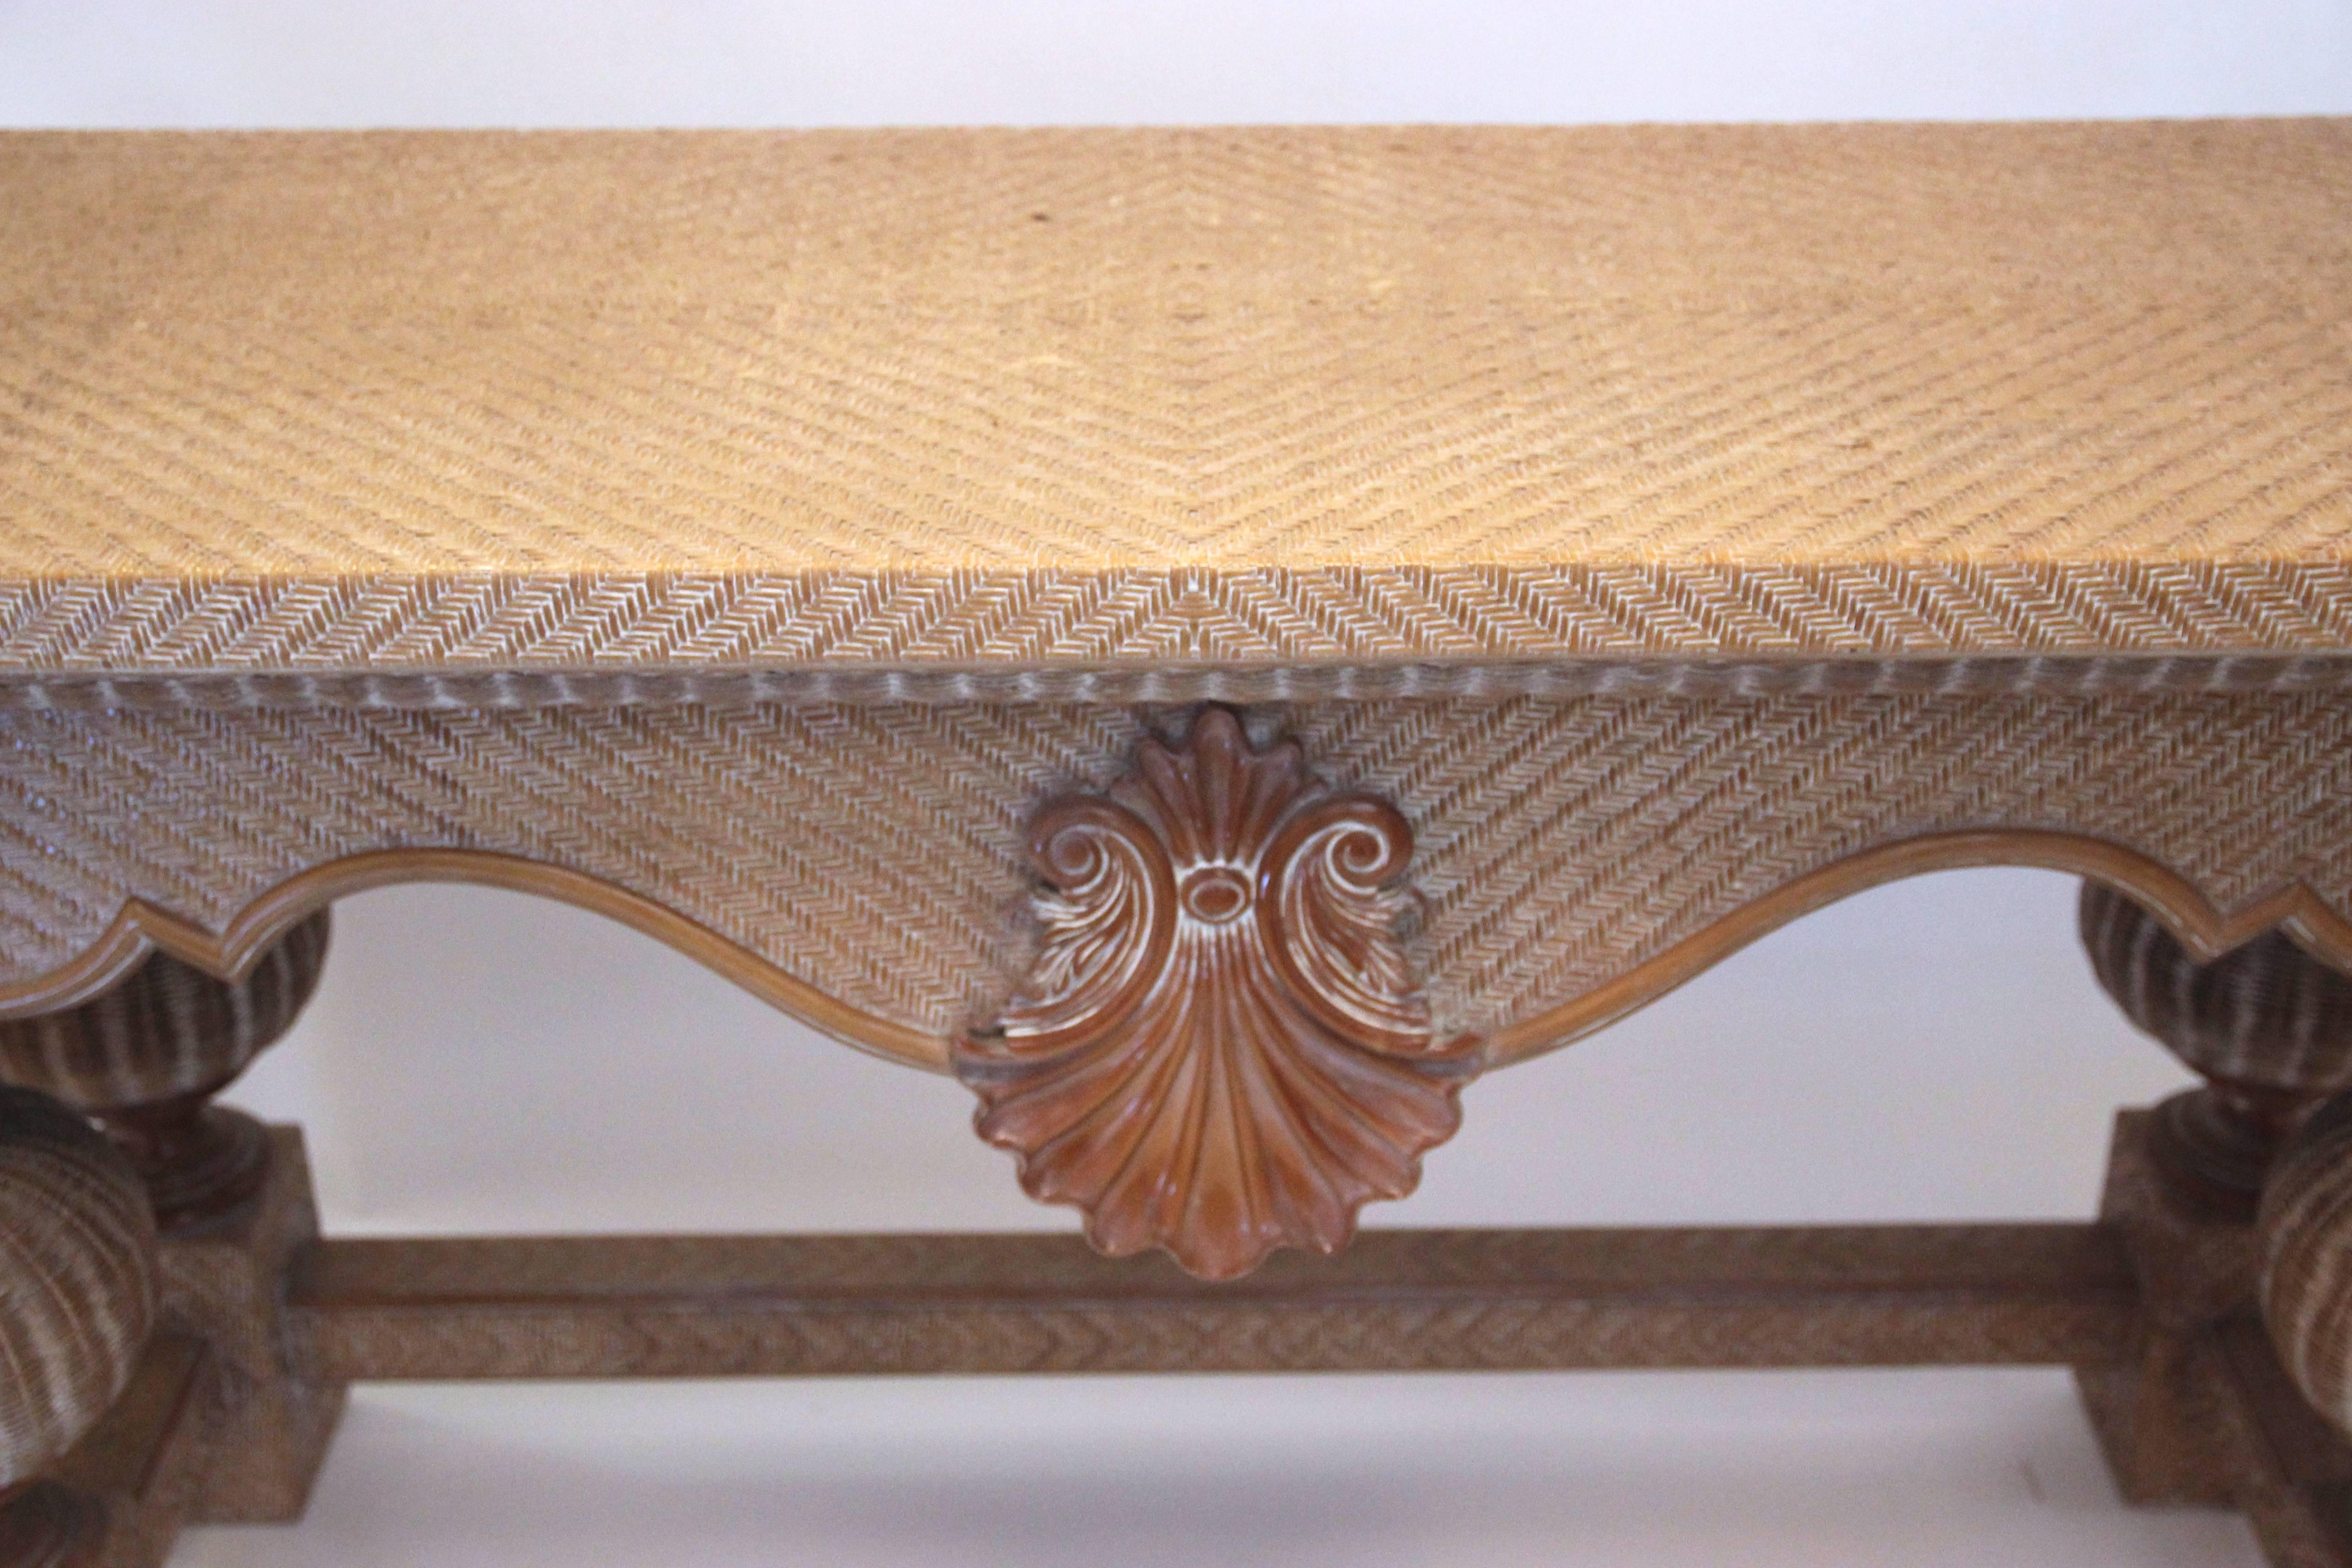 Wood console sheathed rattan,
circa 1970, France.
Measures: Height: 87 cm, width 180 cm, depth 55 cm.